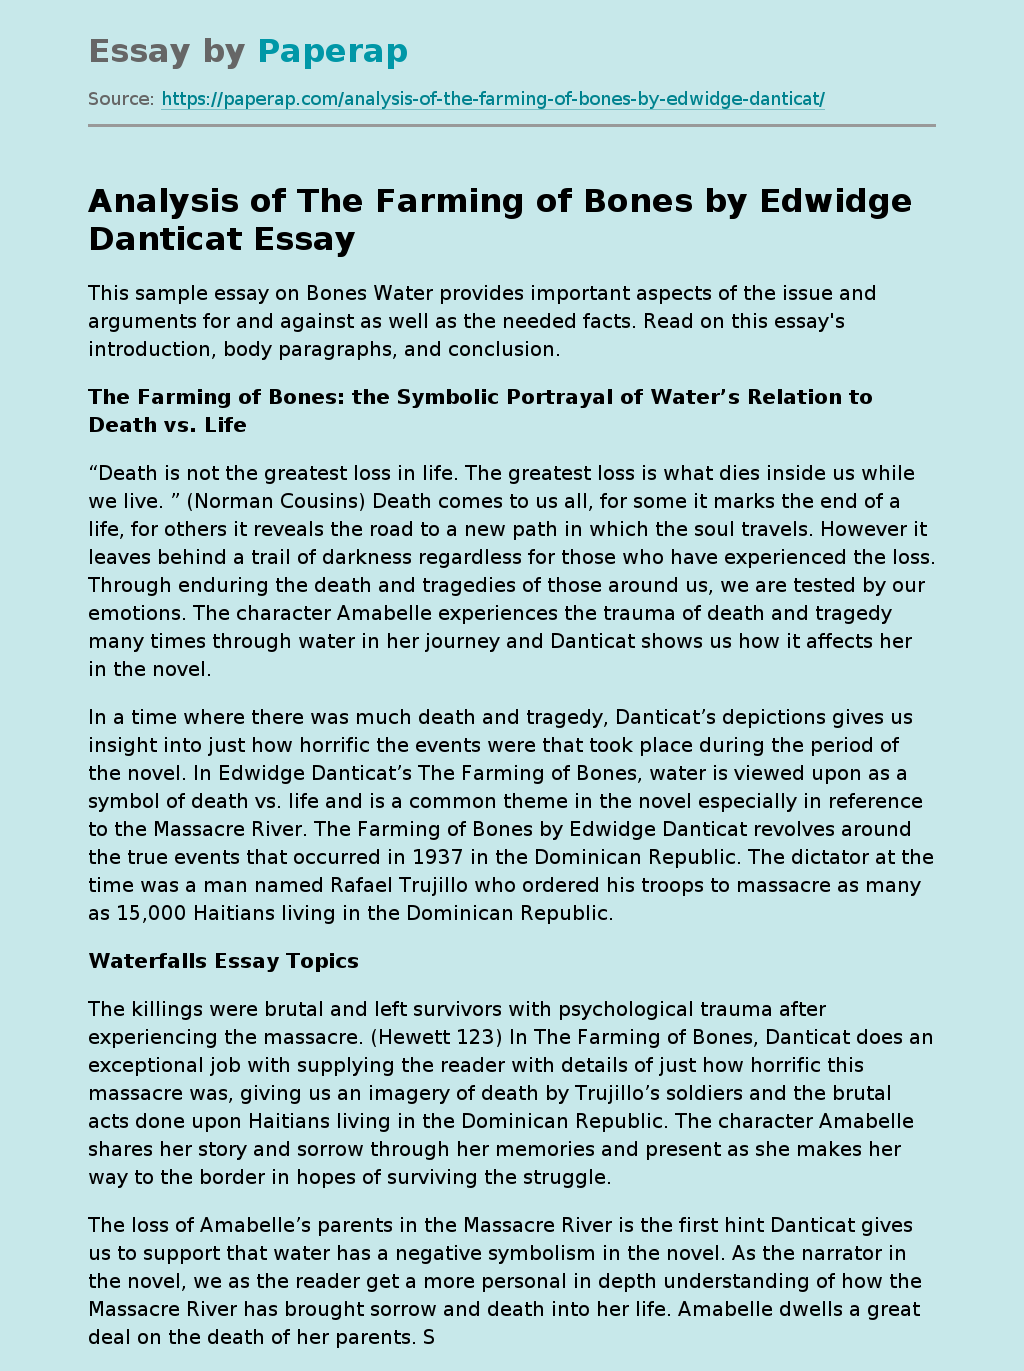 Analysis of The Farming of Bones by Edwidge Danticat